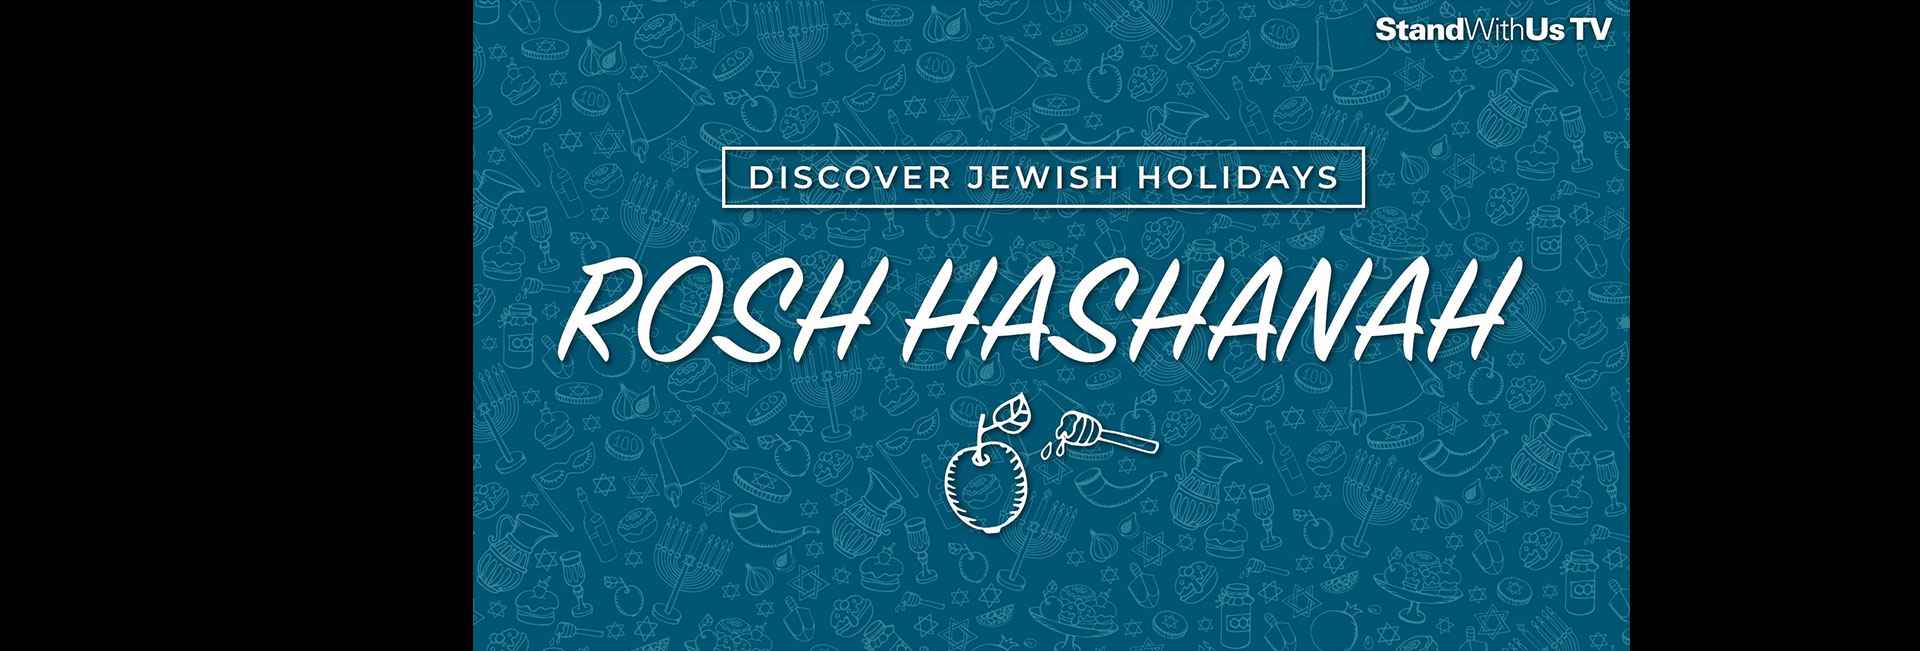 Discover Jewish Holidays: Rosh Hashanah